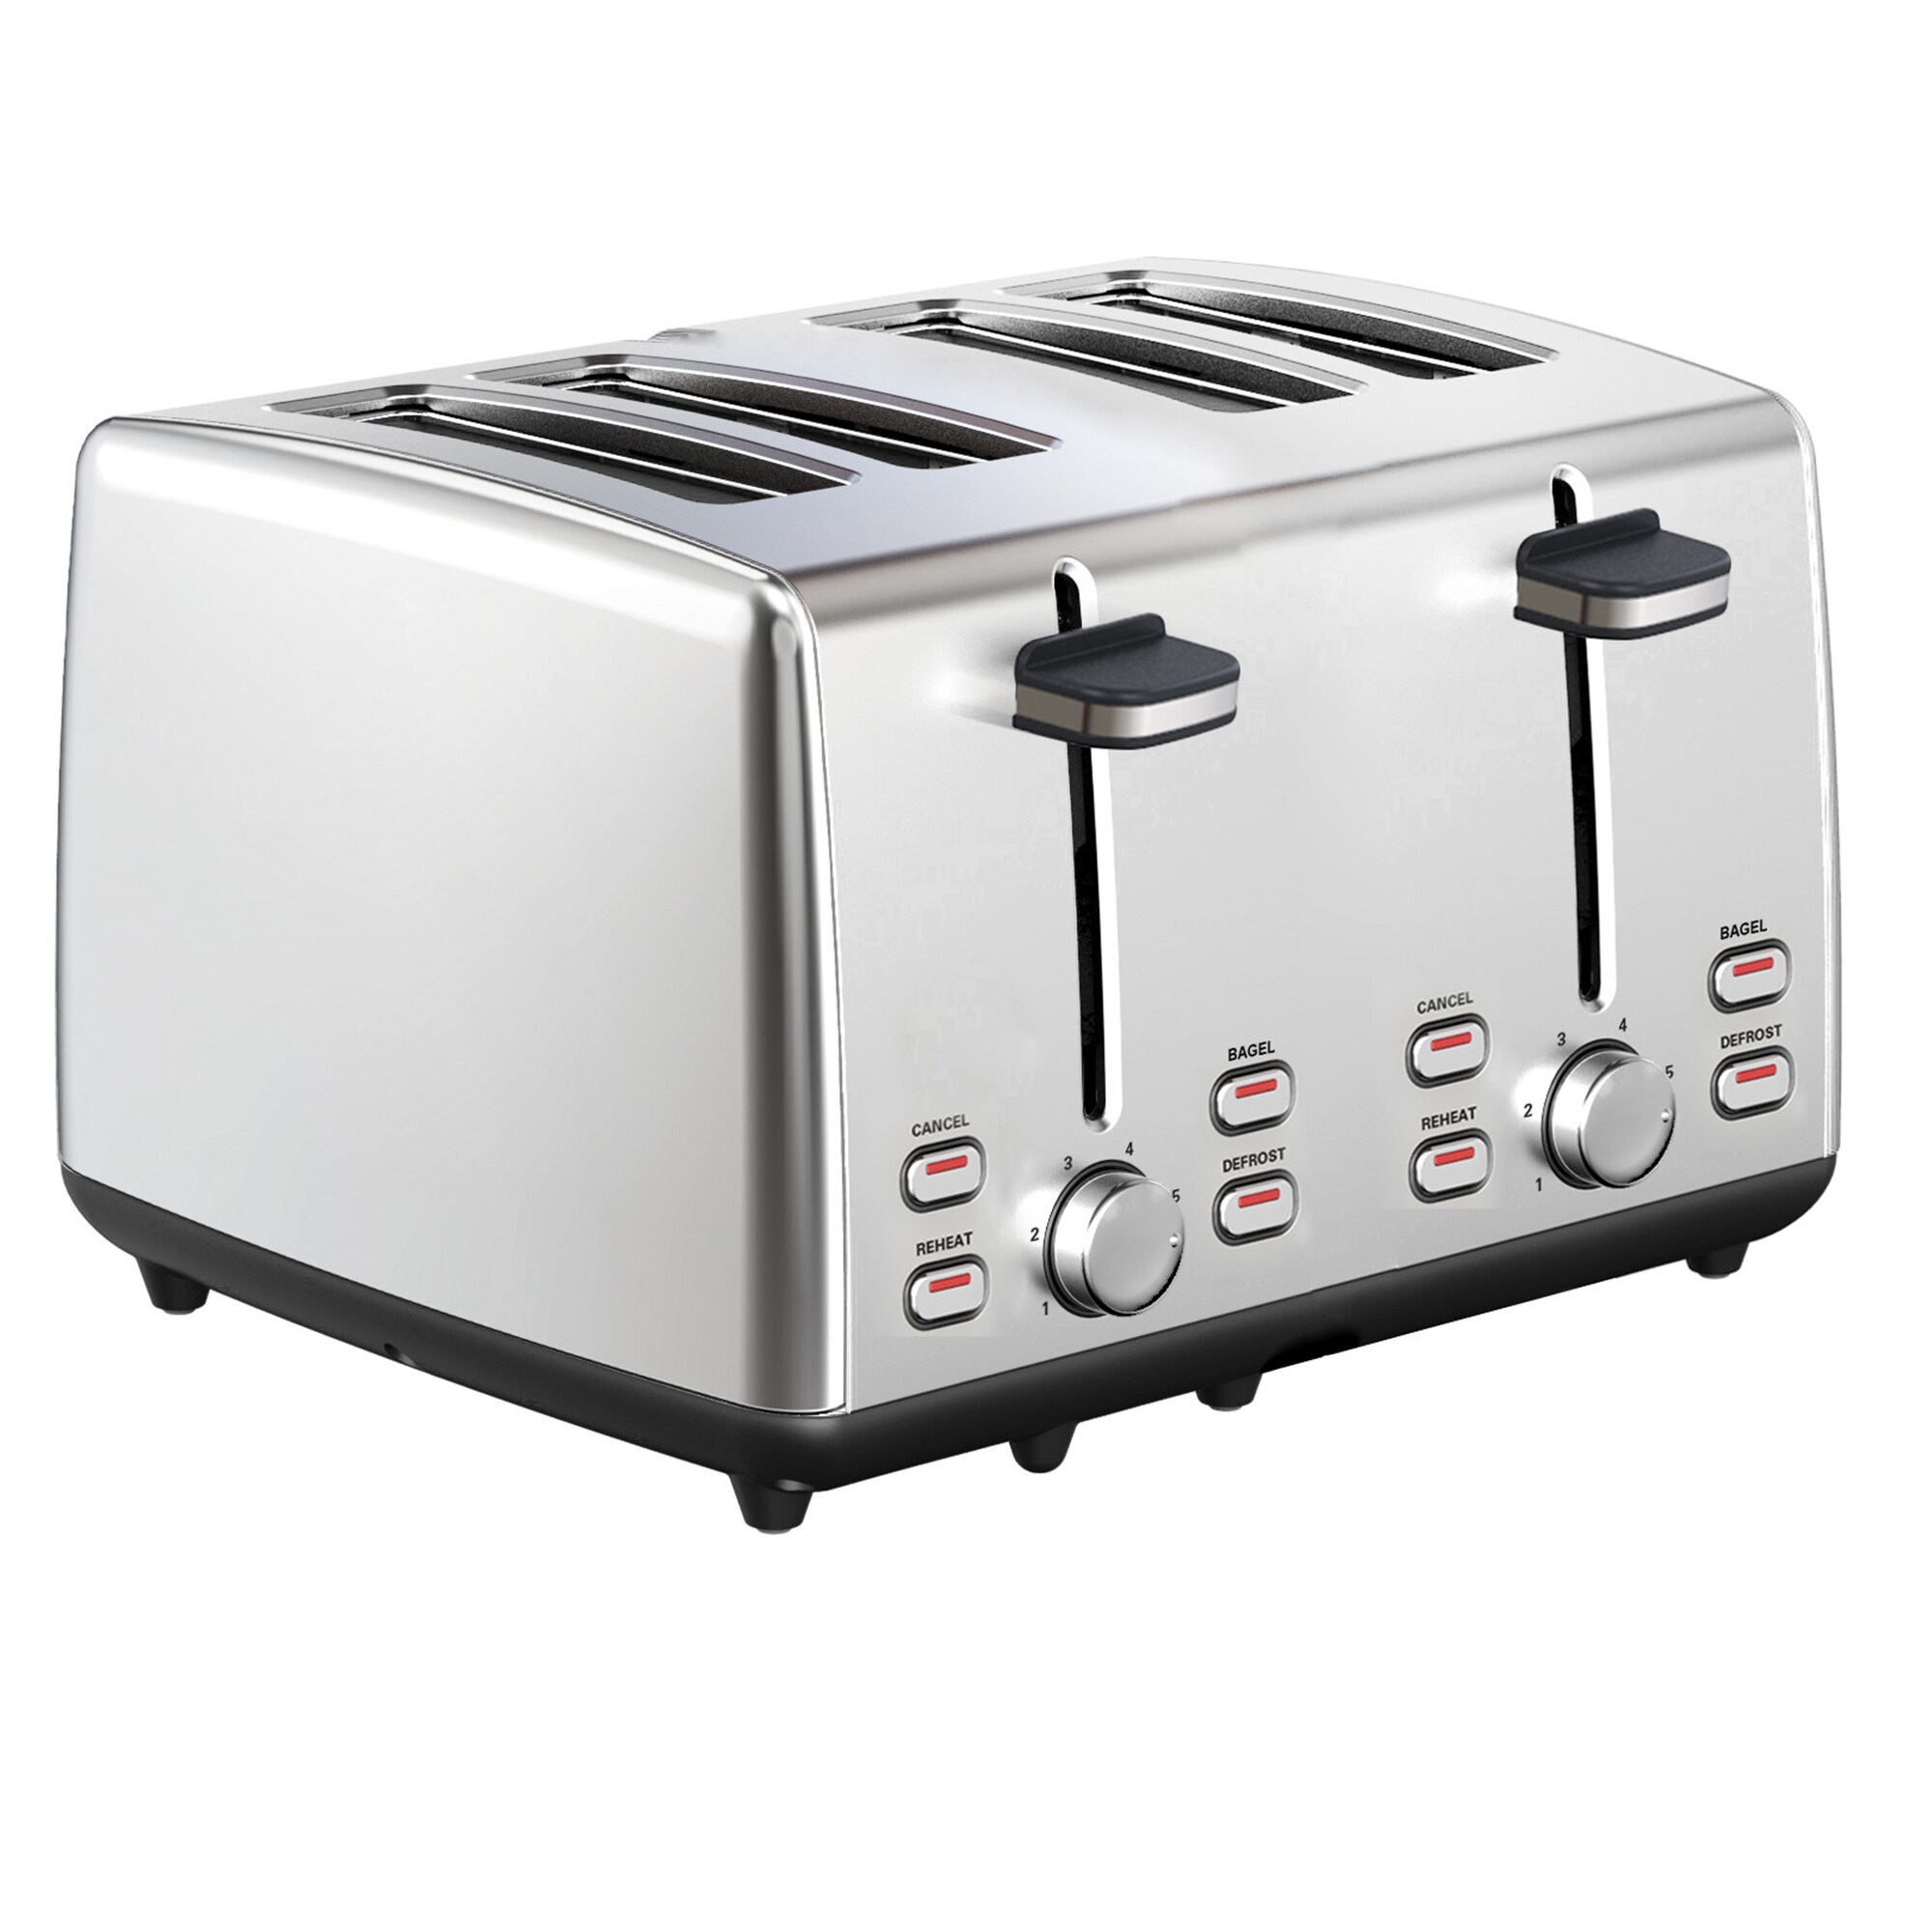 GE - 4-Slice Toaster - Stainless Steel